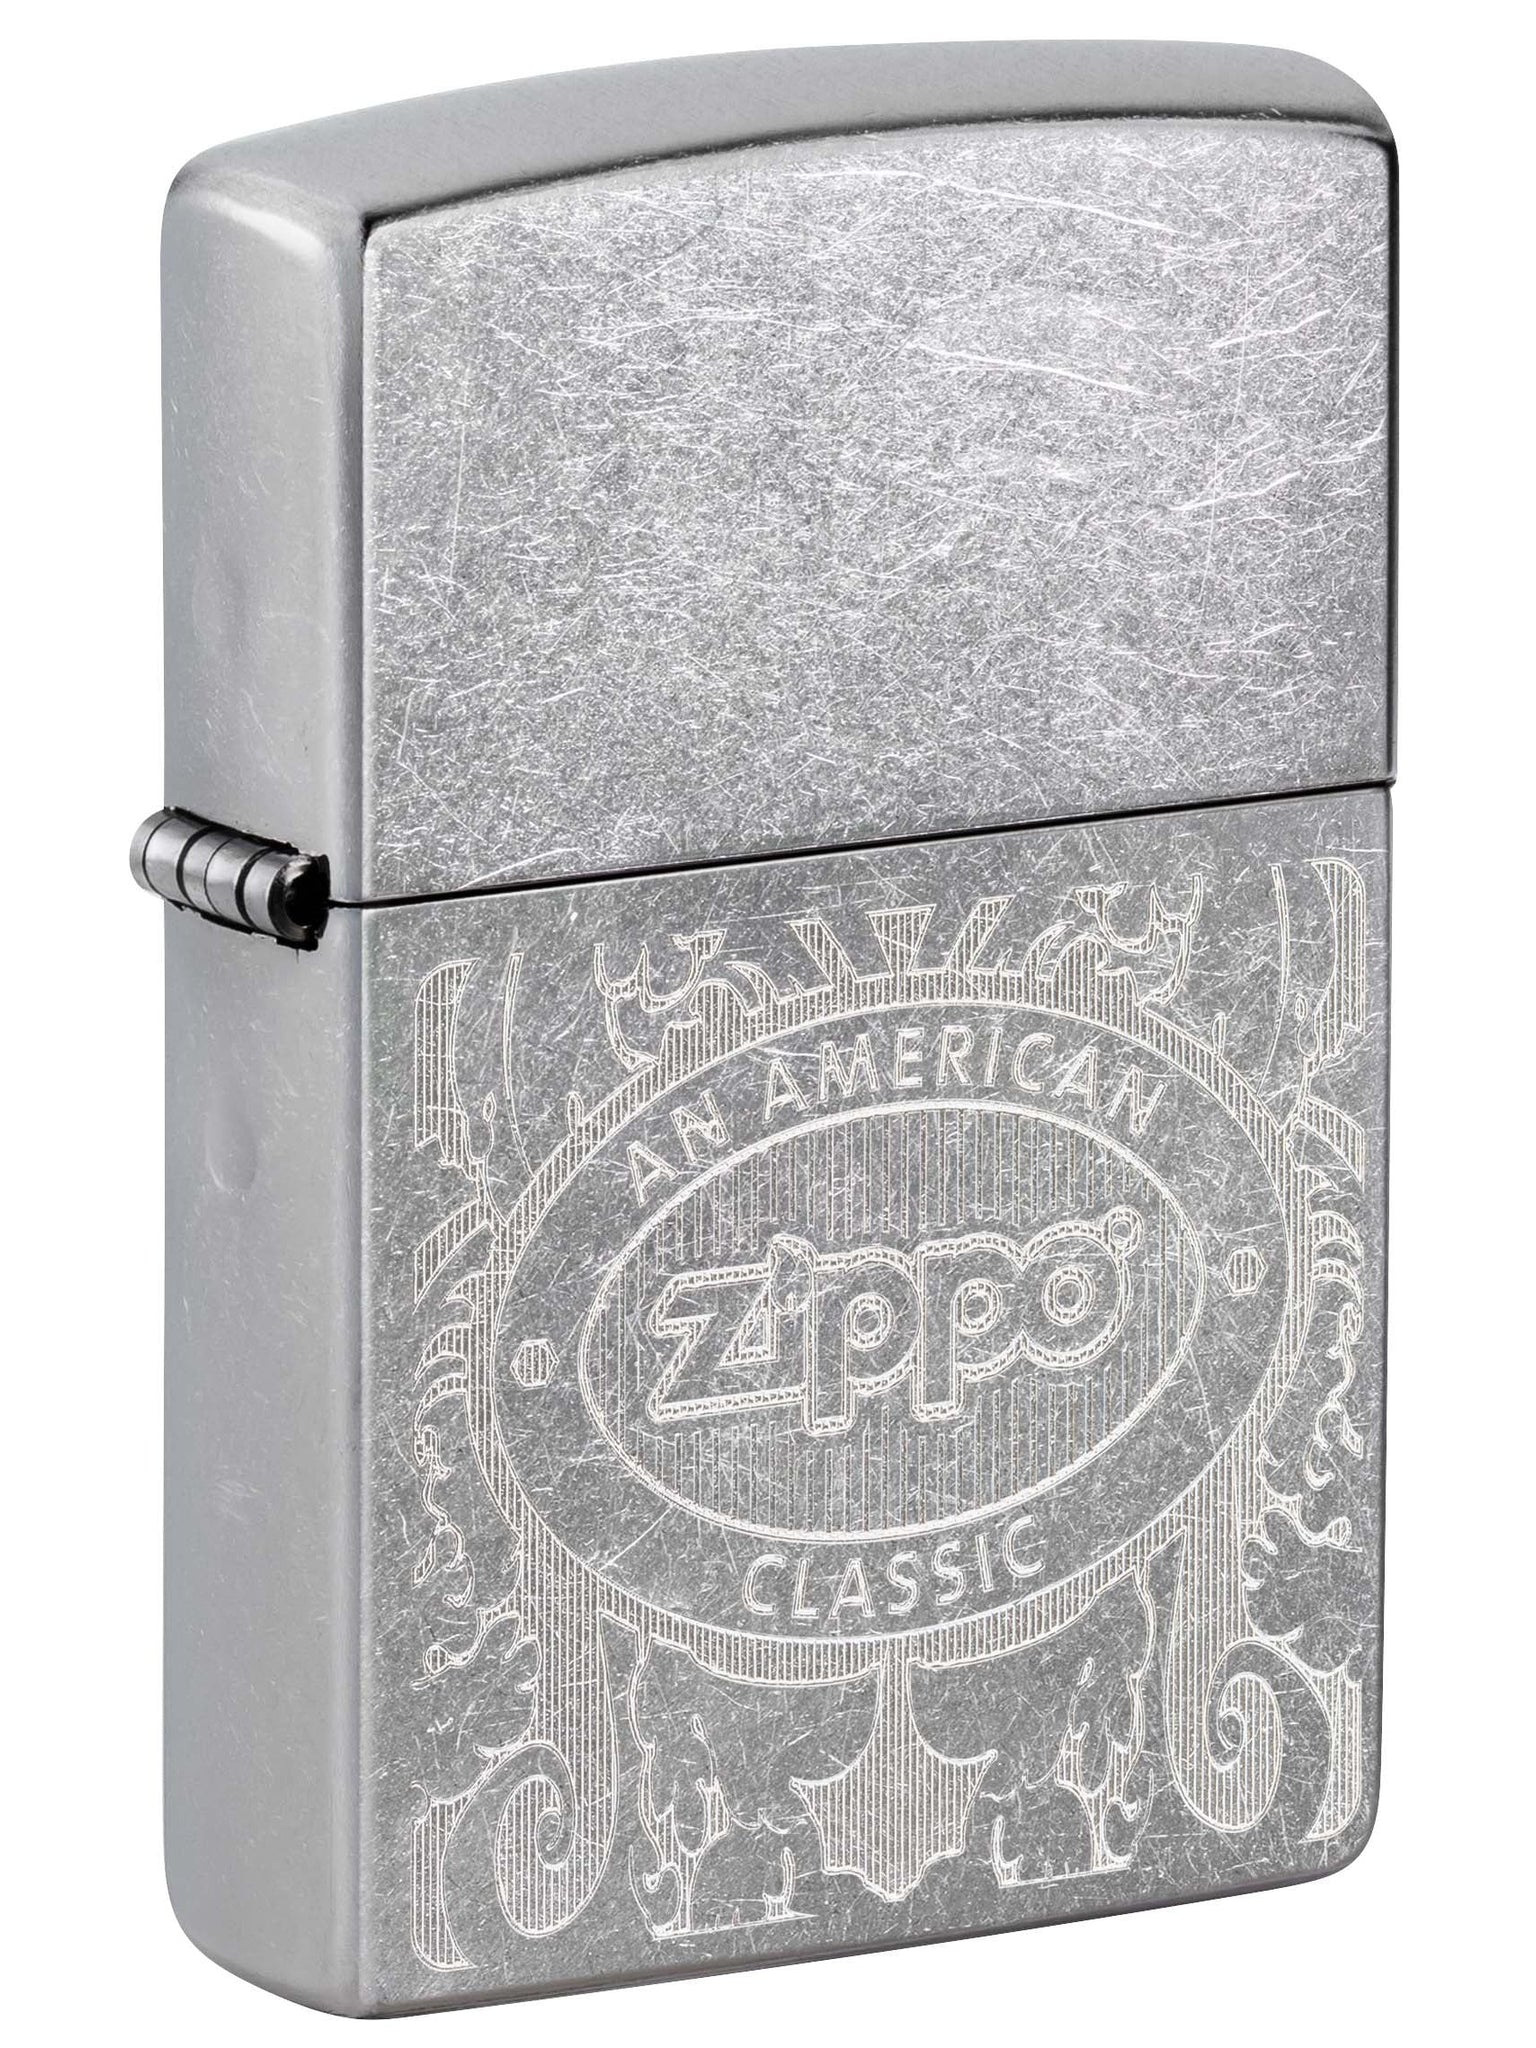 Zippo an American Classic.